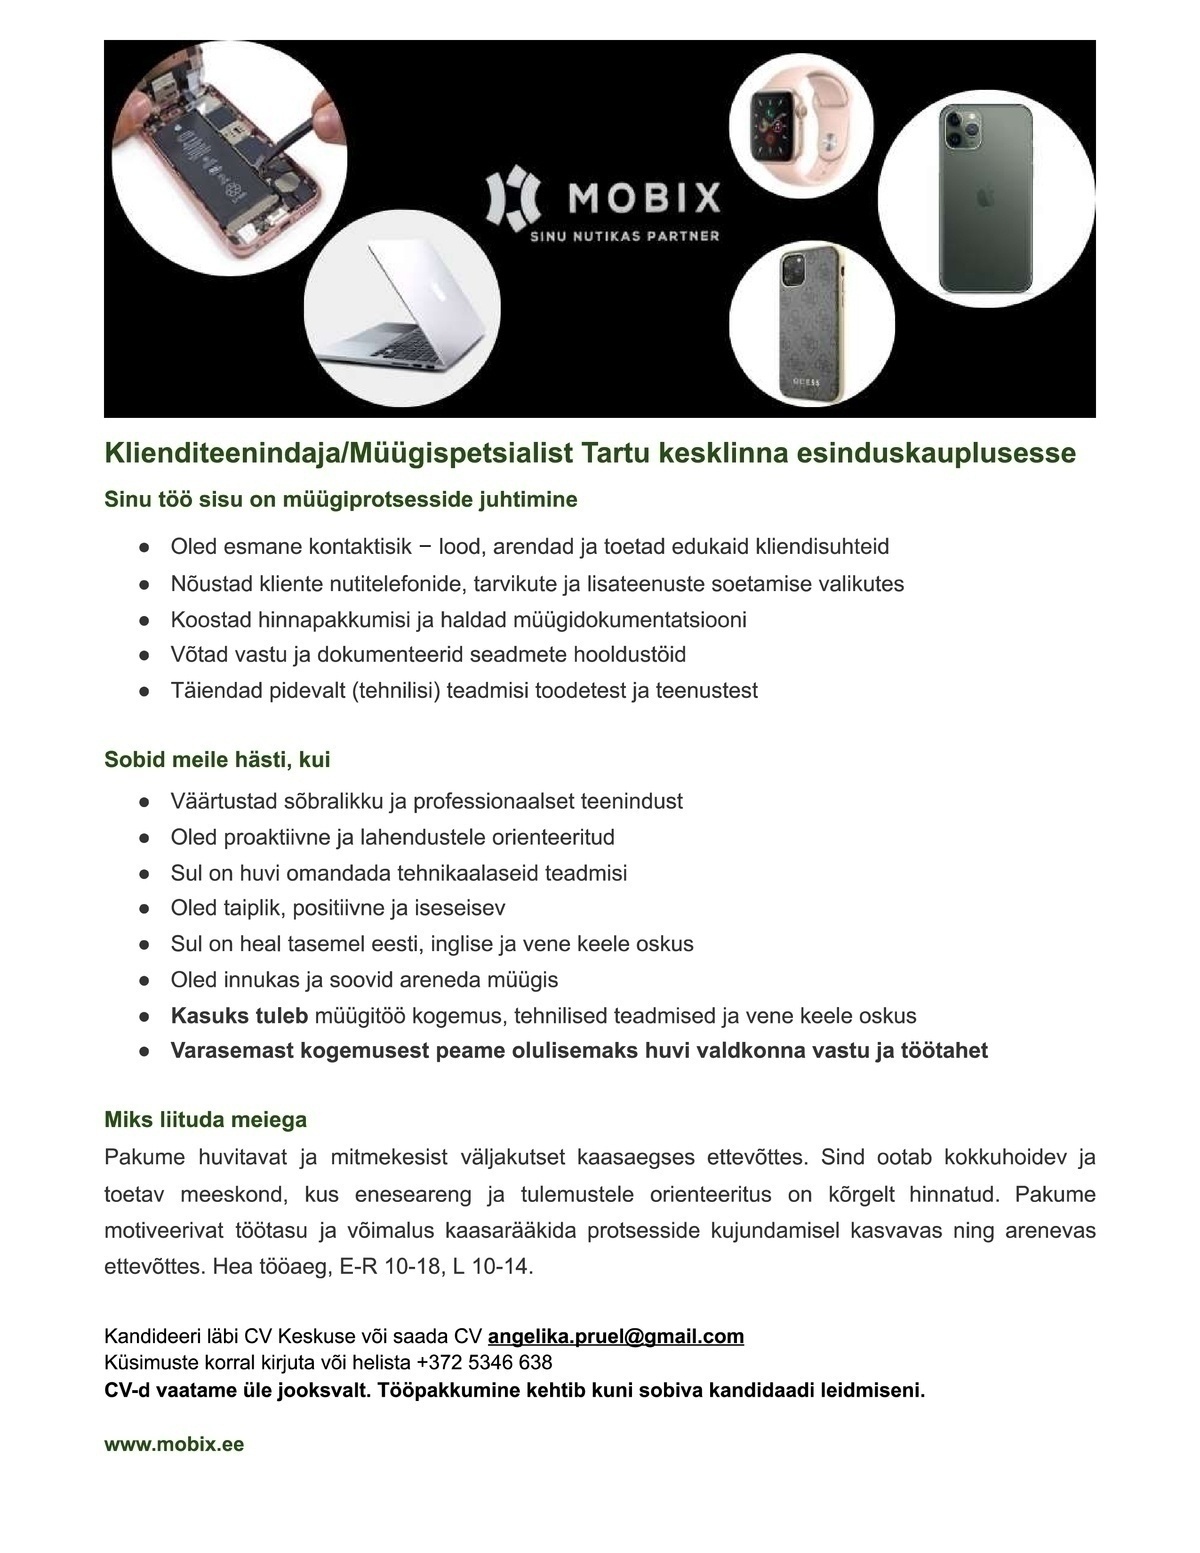 Mobix JK OÜ Klienditeenindaja/ Müügispetsialist